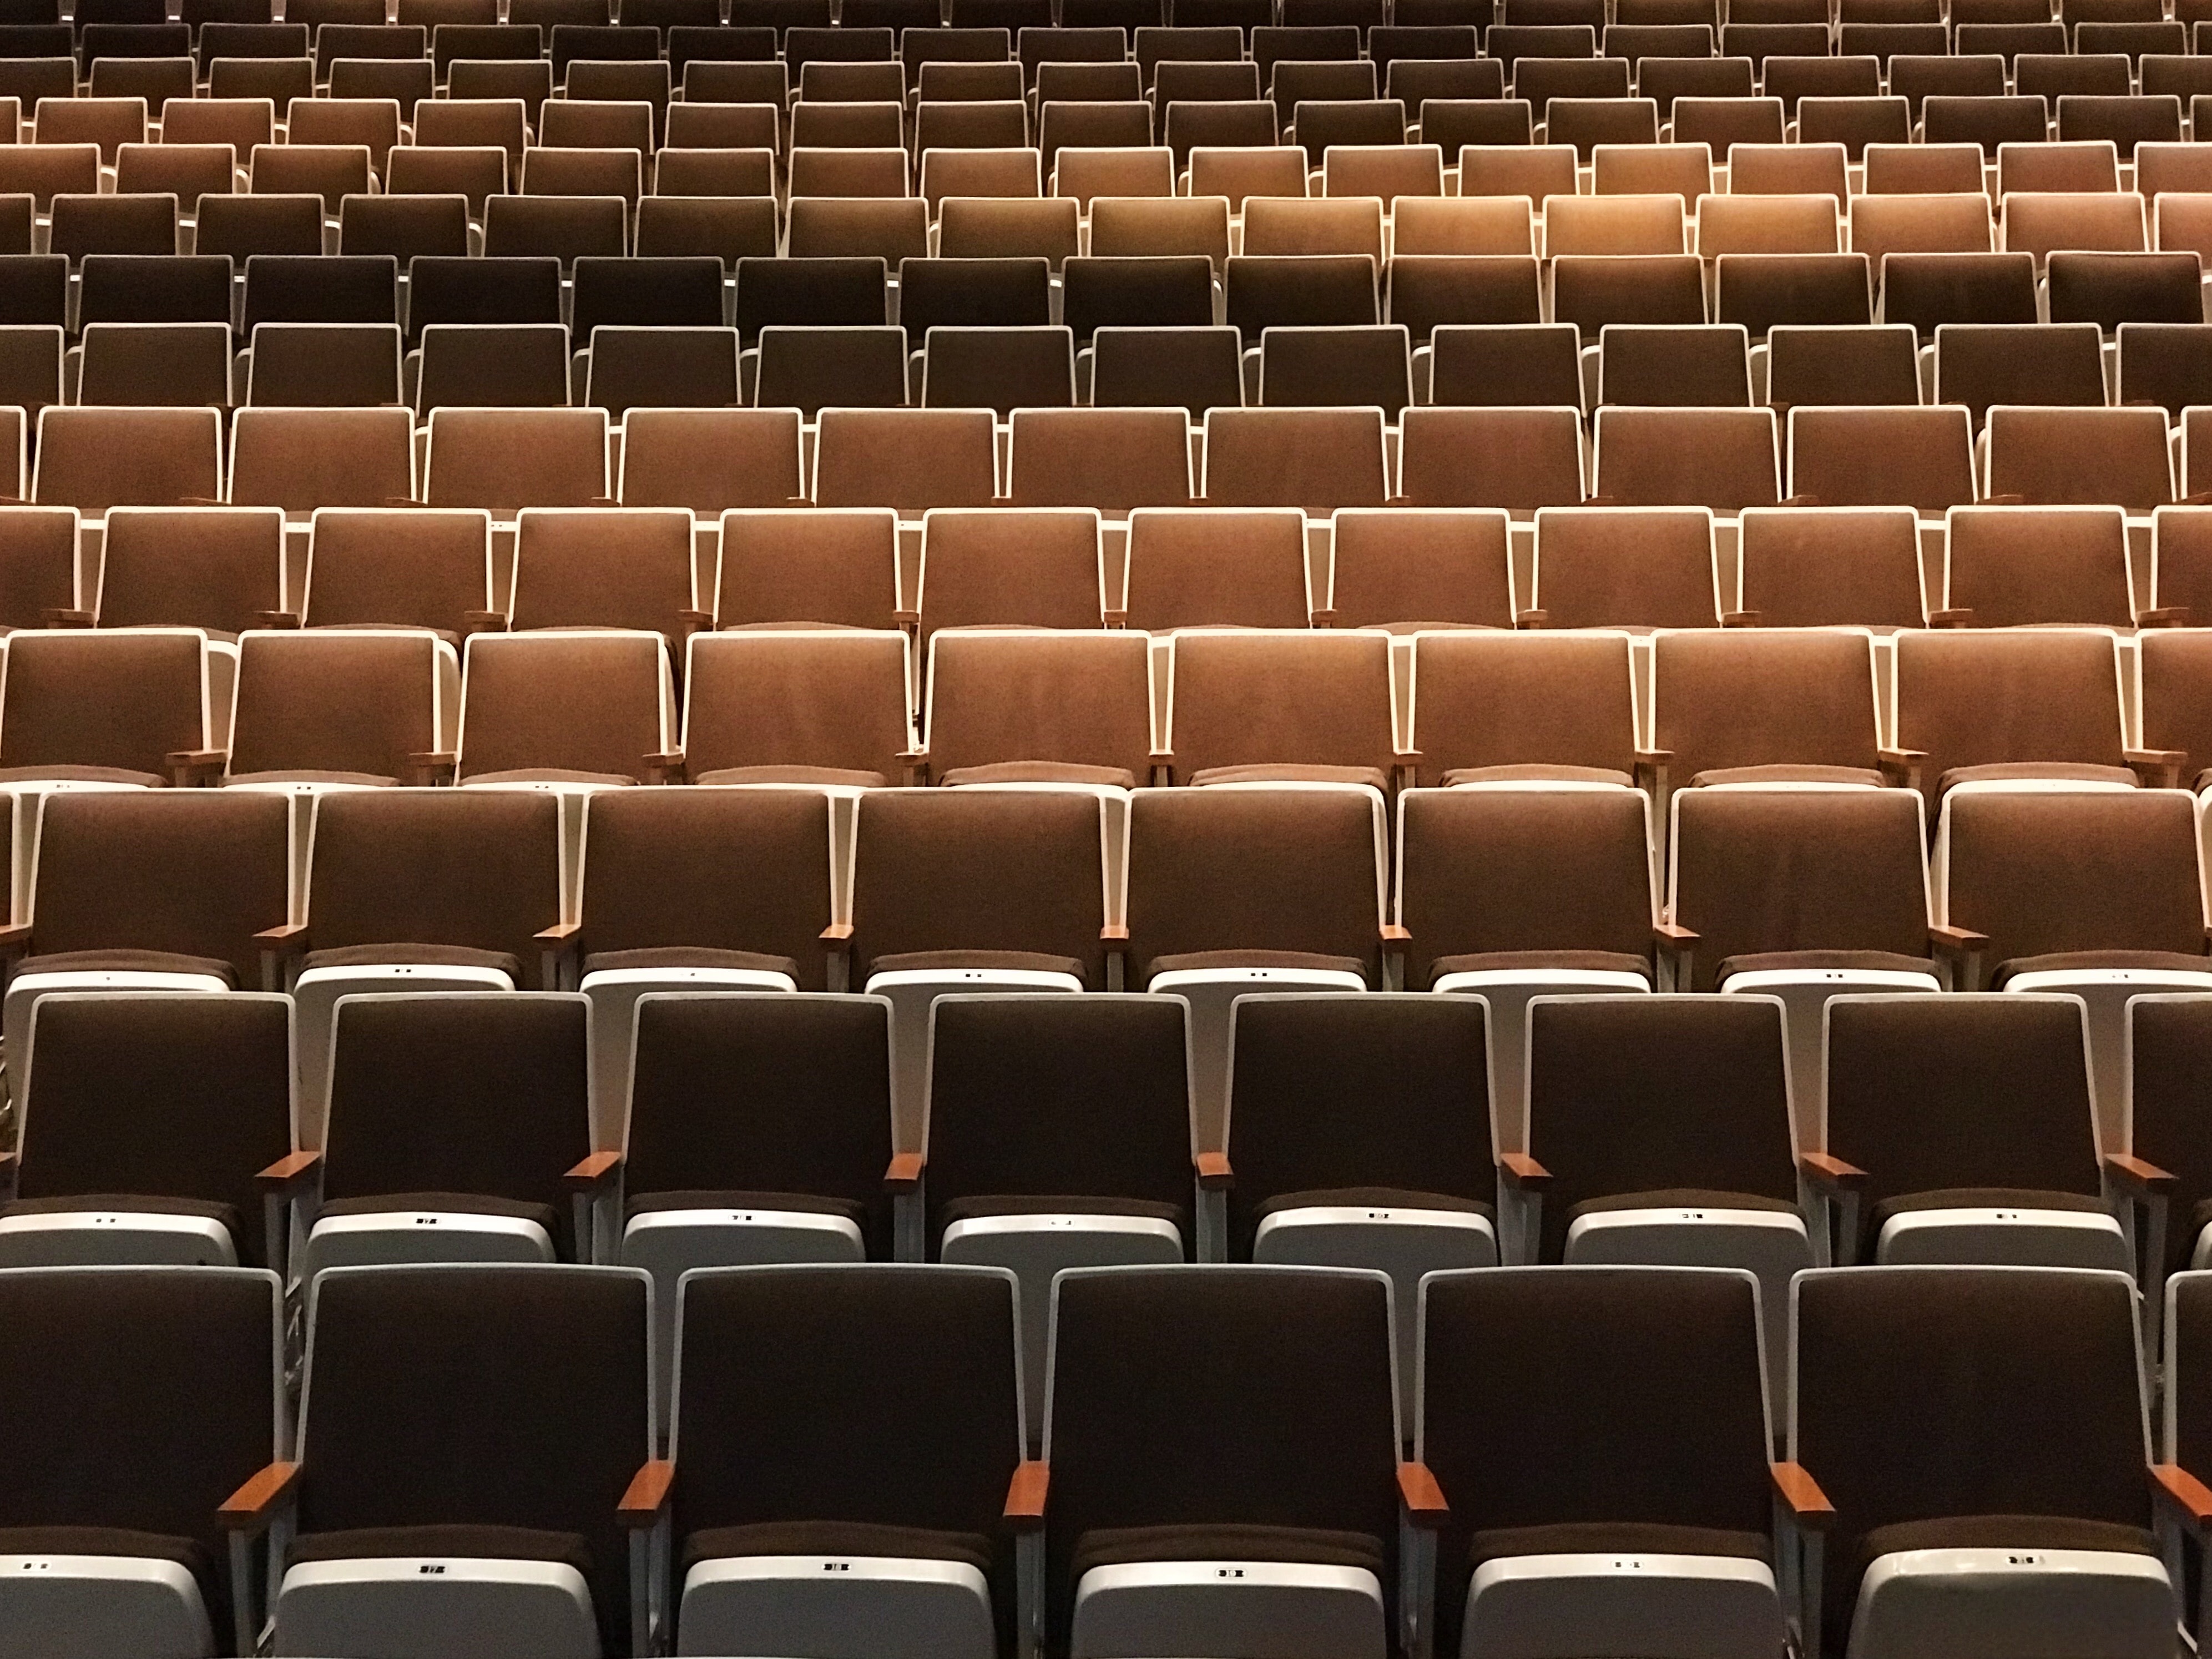 seats in an auditorium